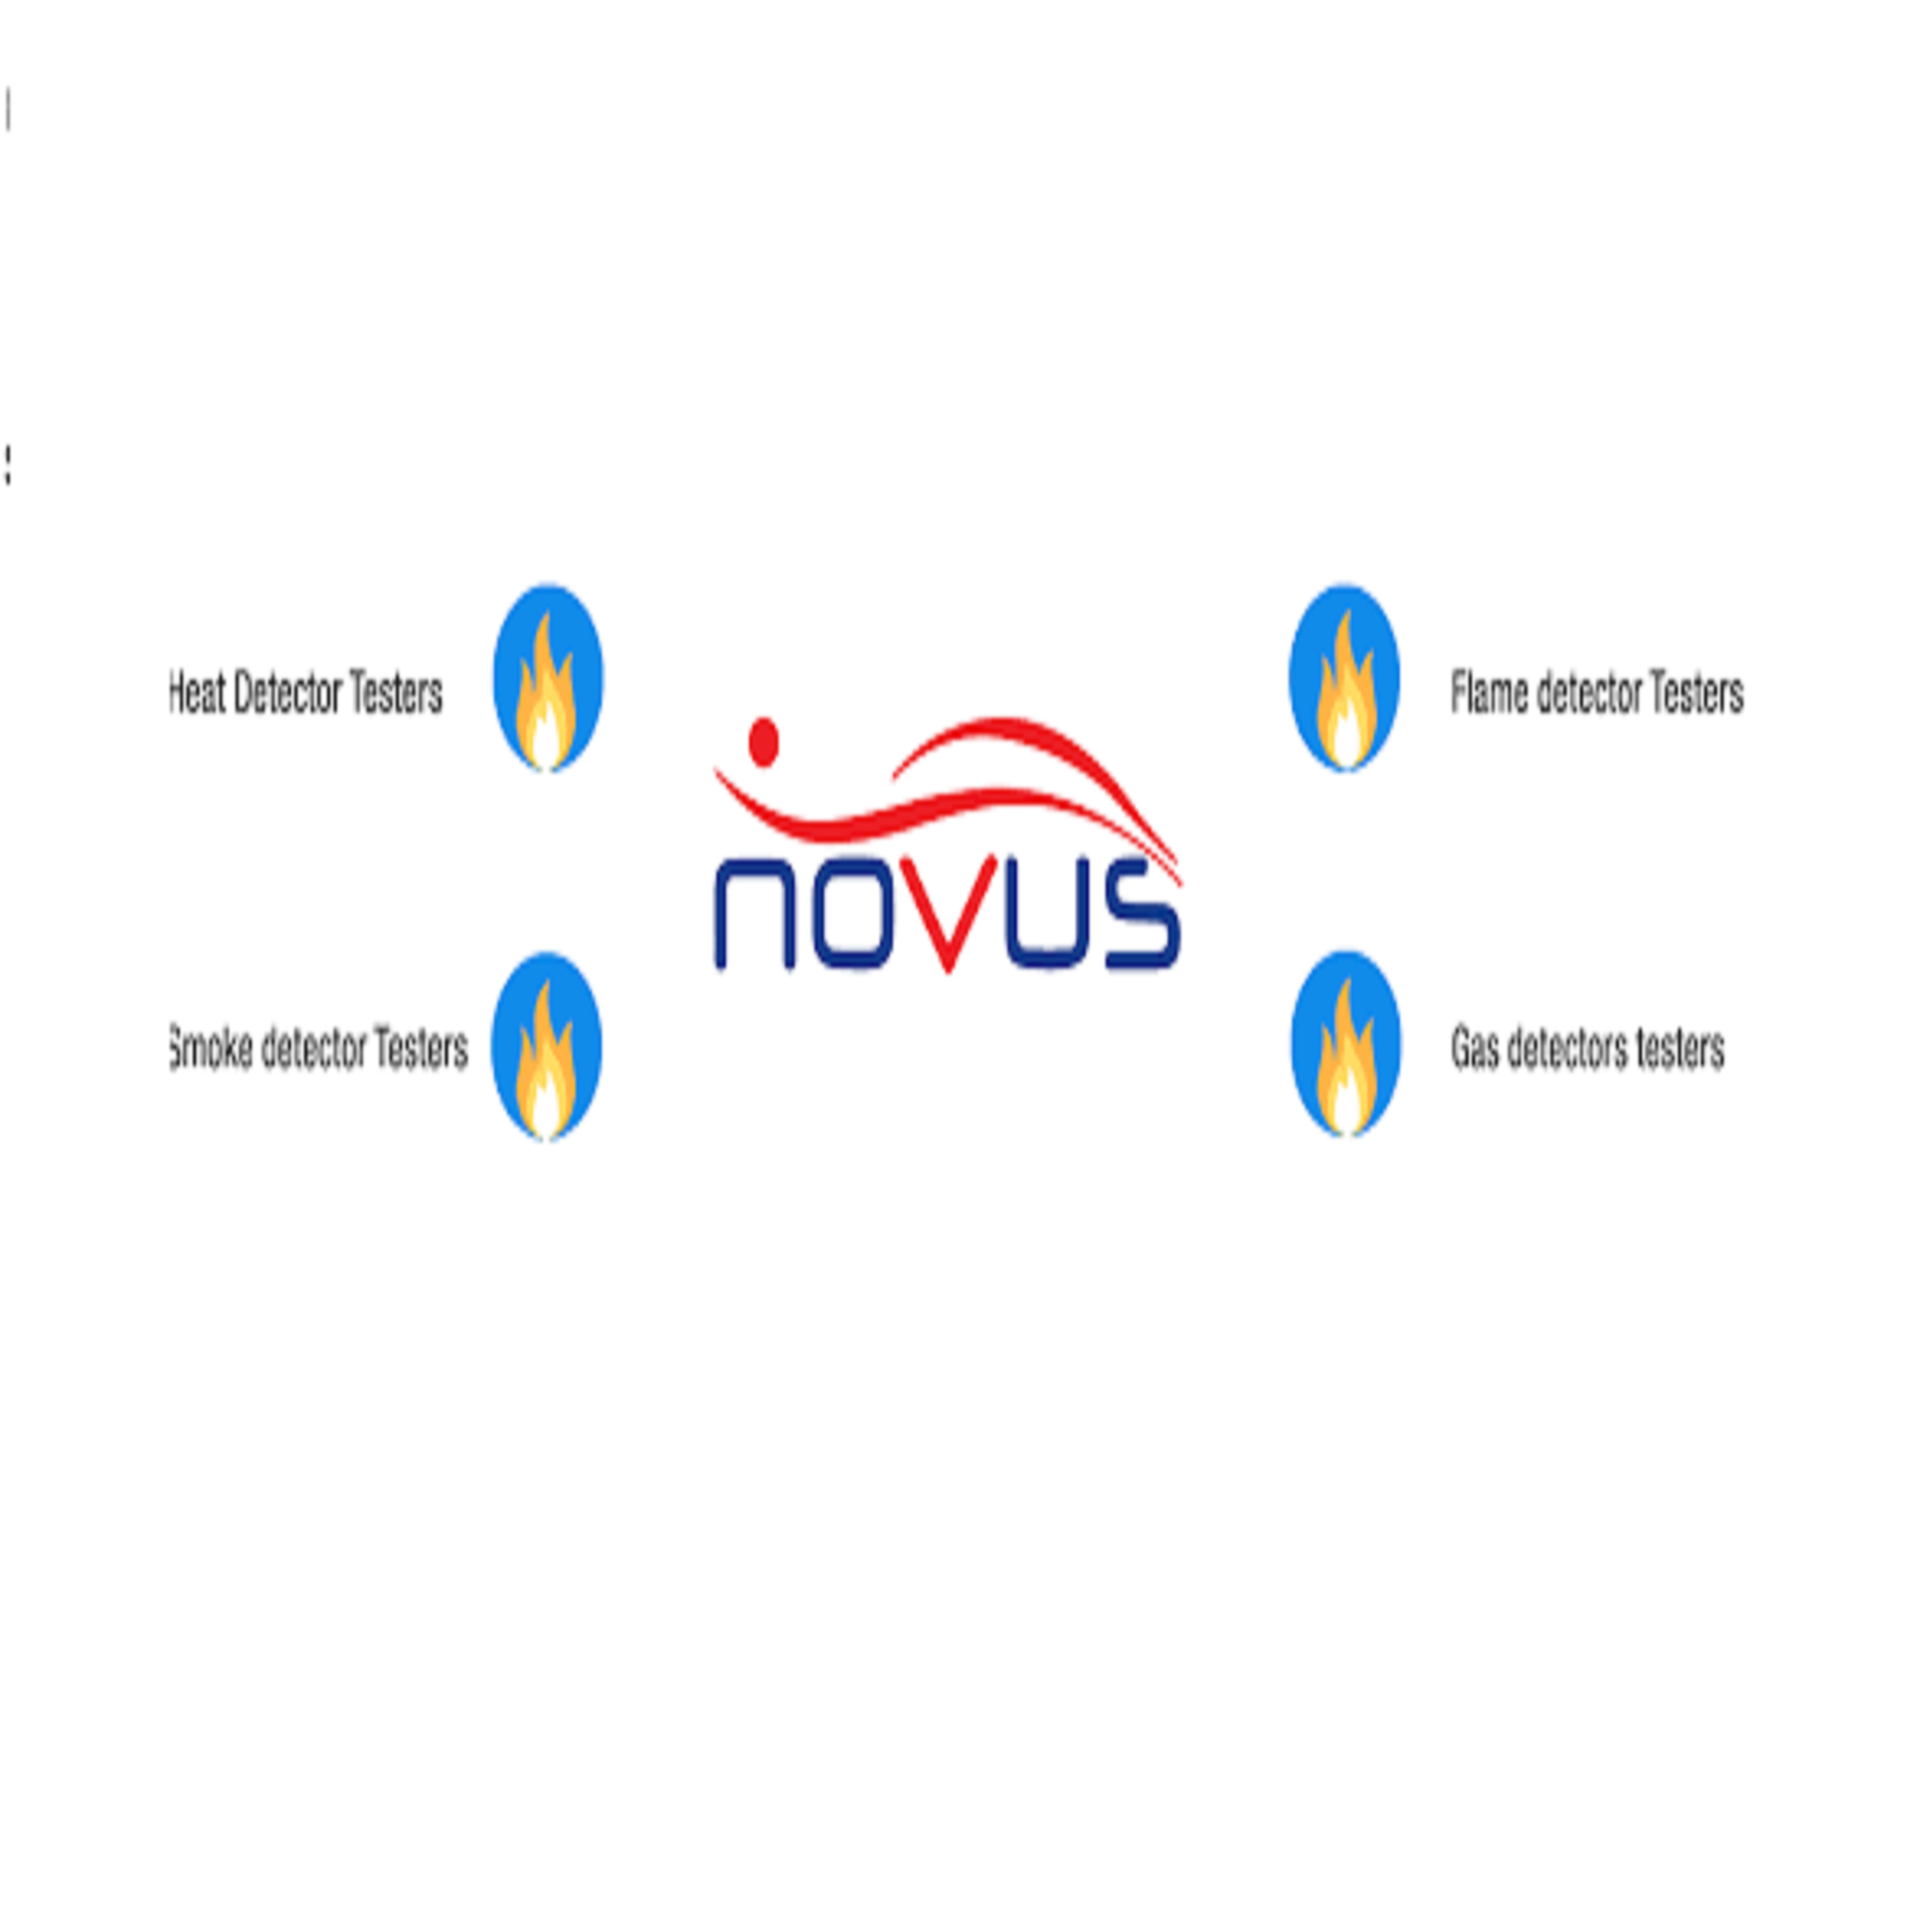 How Solo Heat Detector Useful to Prevent Fire - Novus UAE